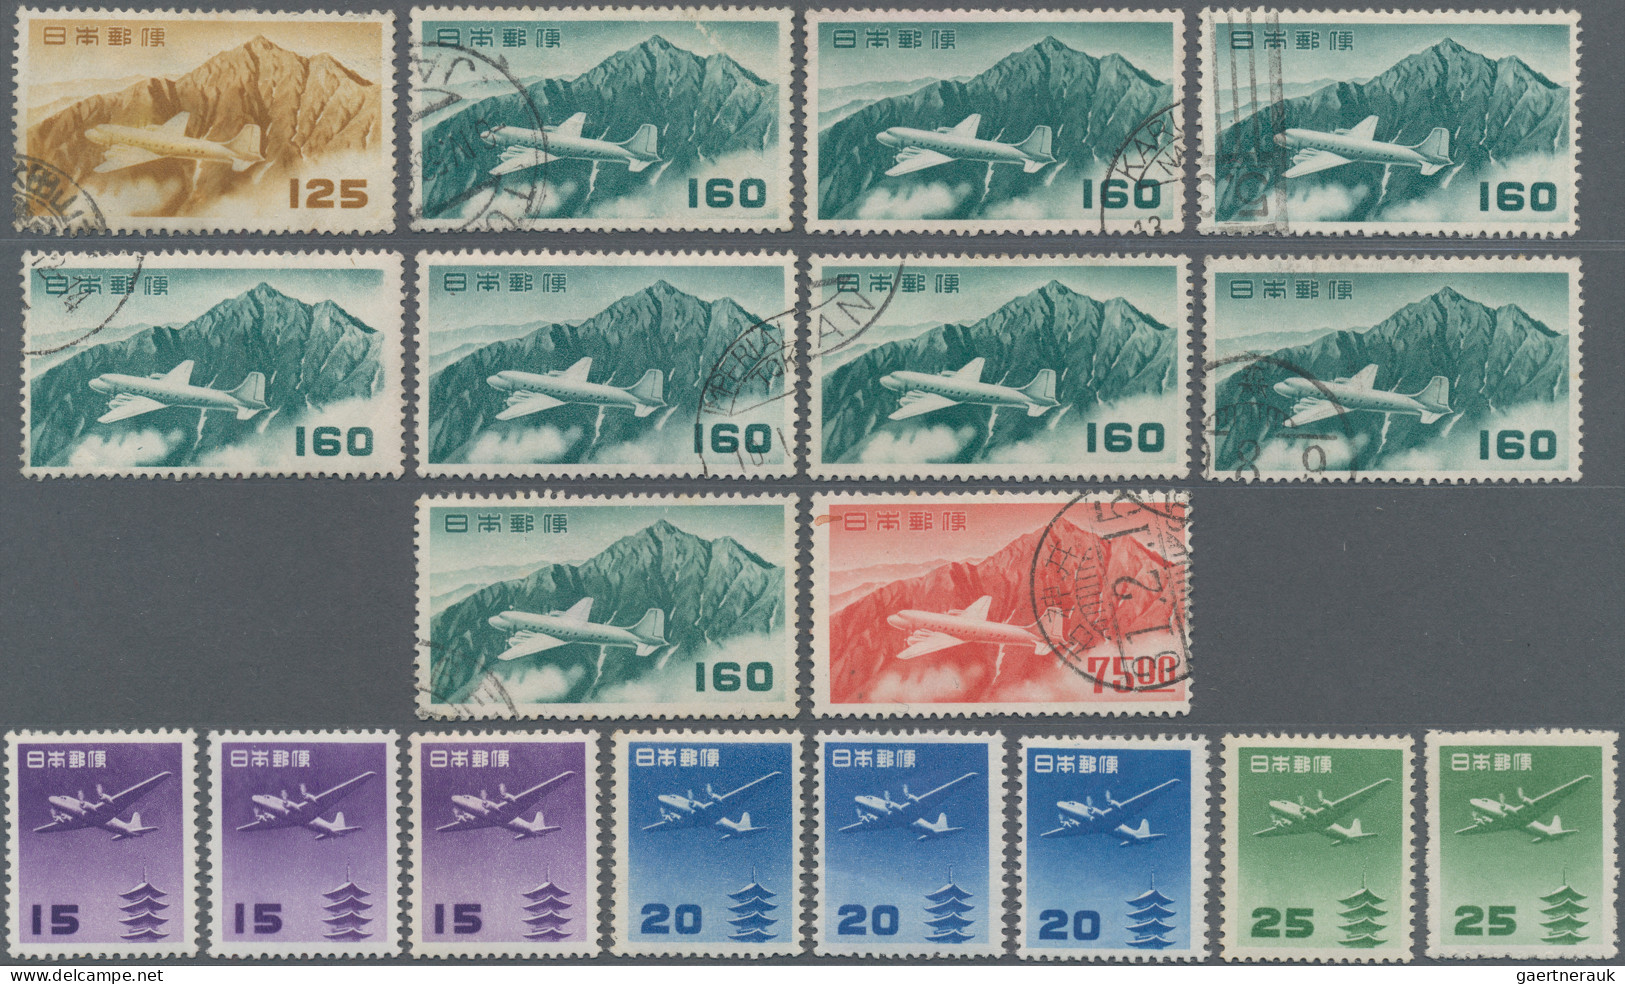 Japan: 1929/1961, stock of airmail stamps, Lake Ashi to Great Buddha, majority u